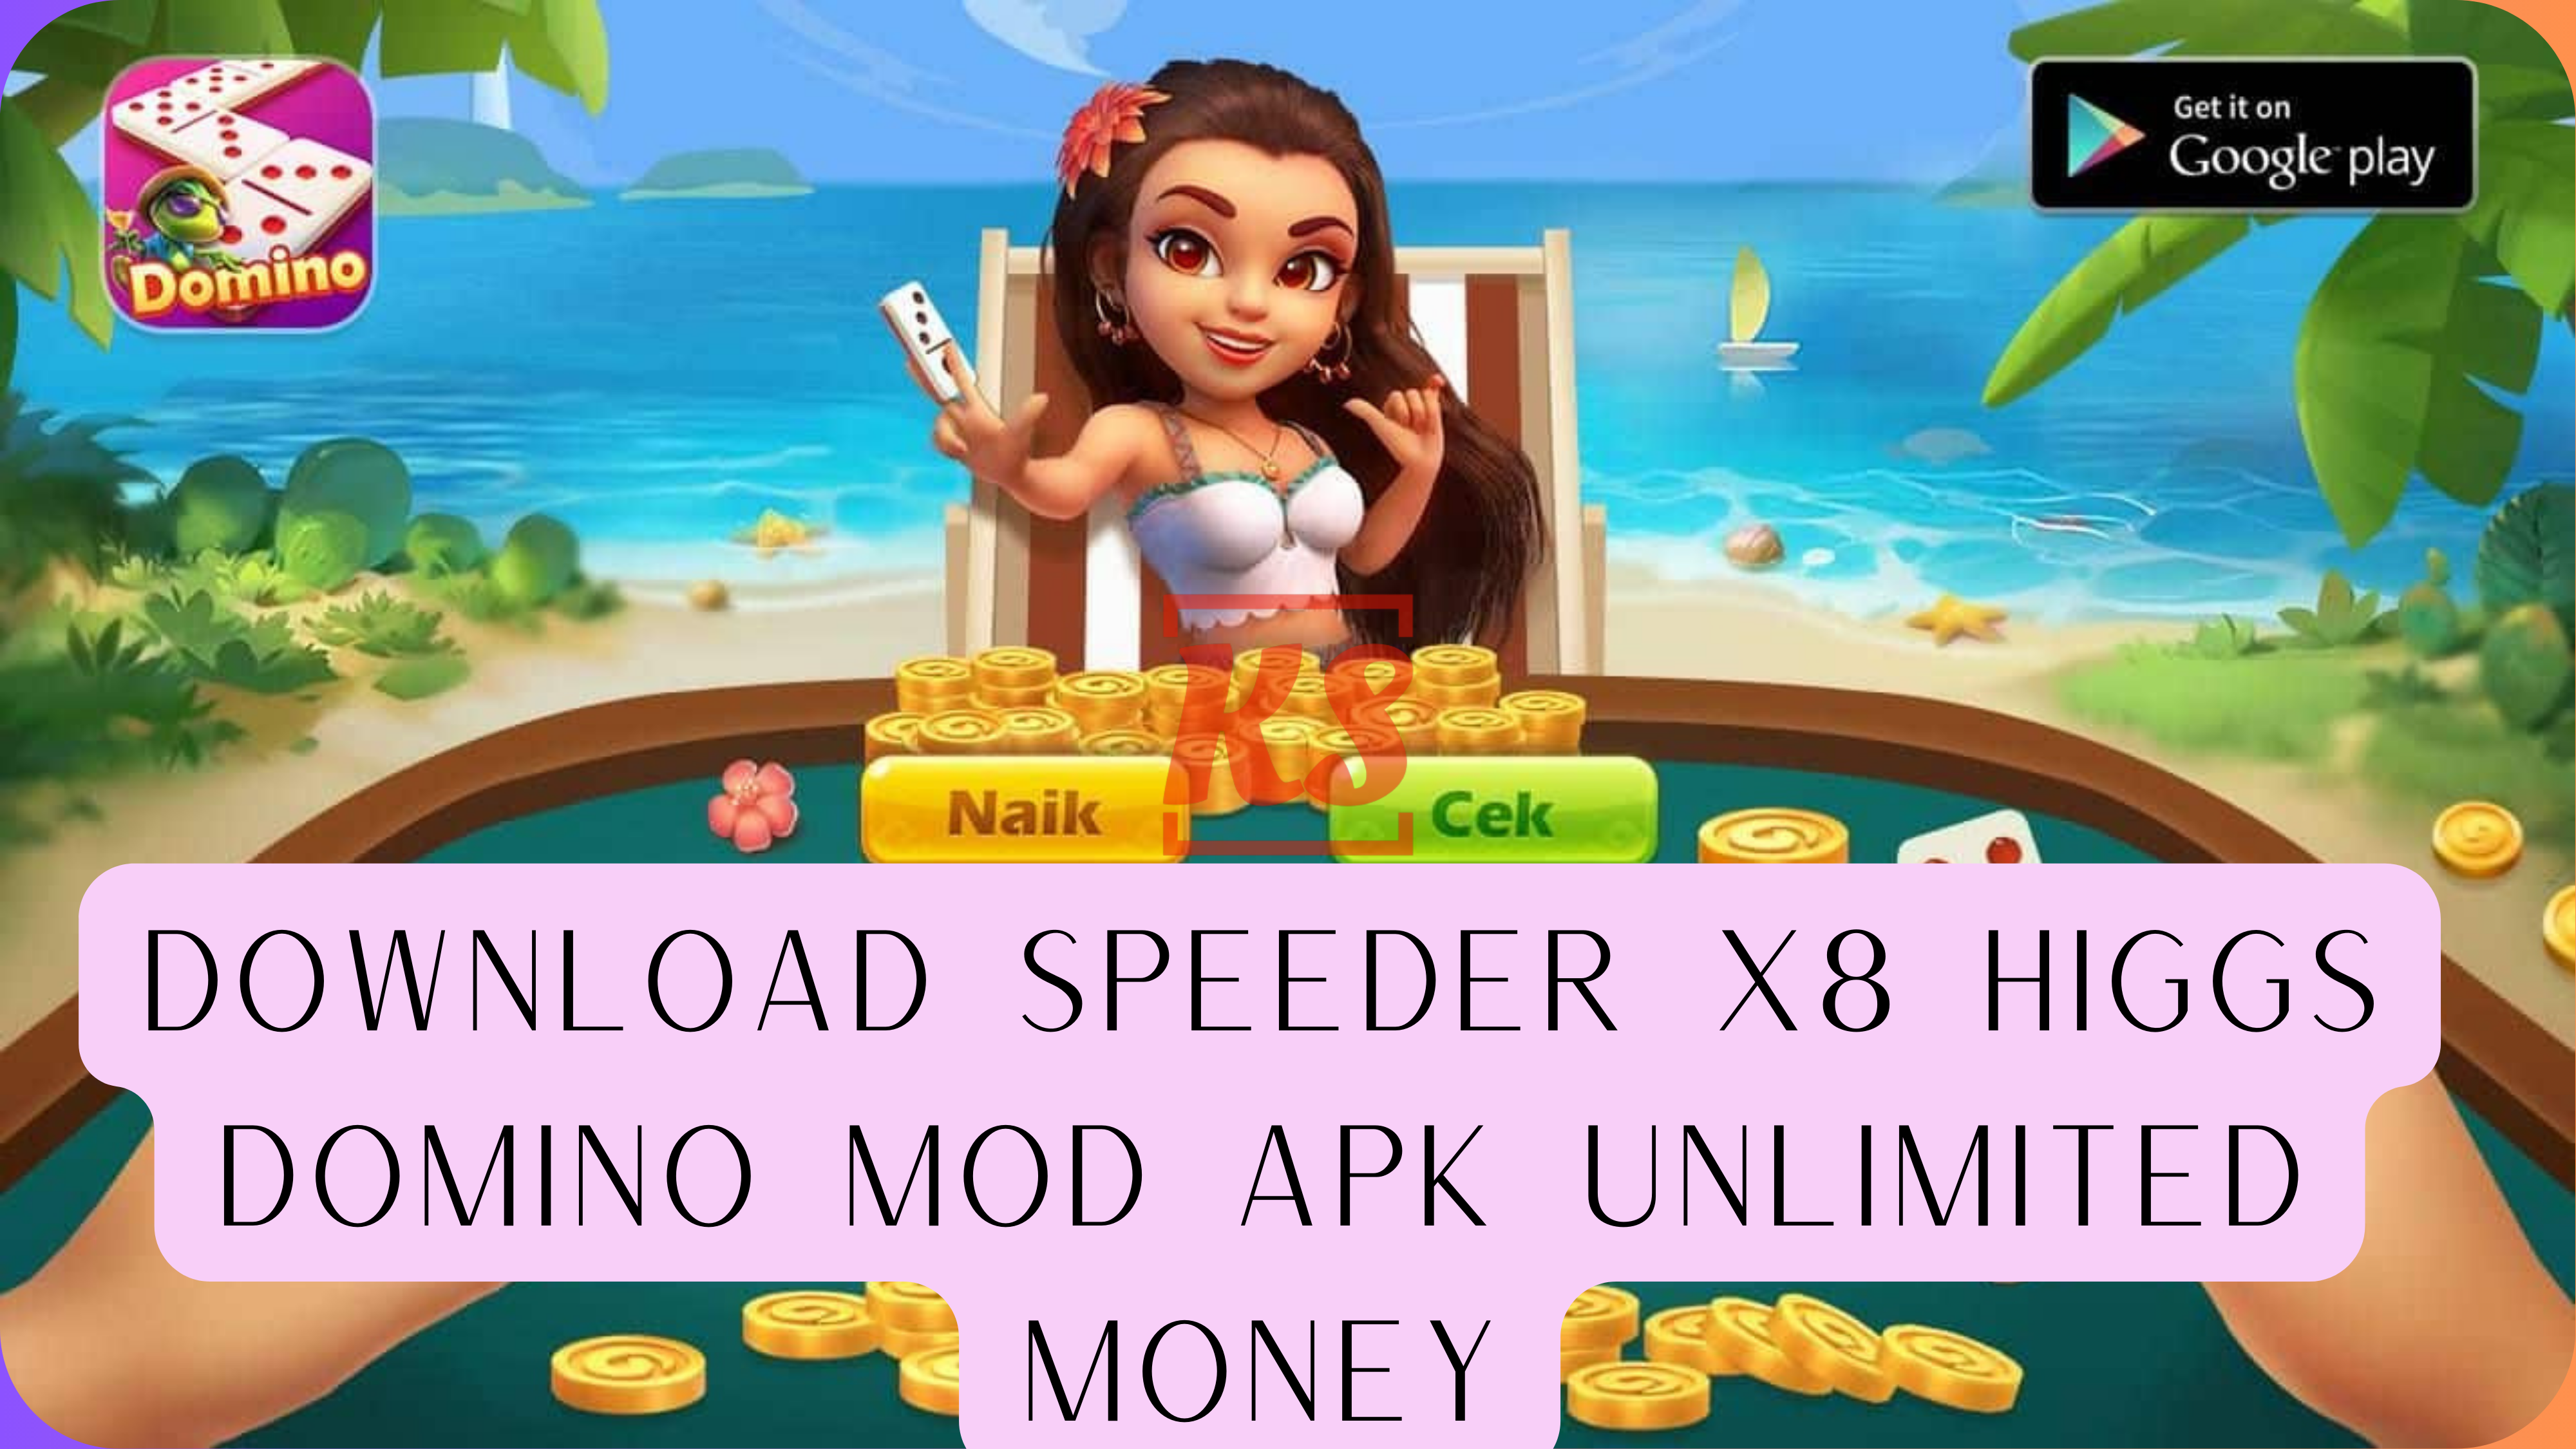 Download Speeder X8 Higgs Domino Mod Apk Unlimited Money